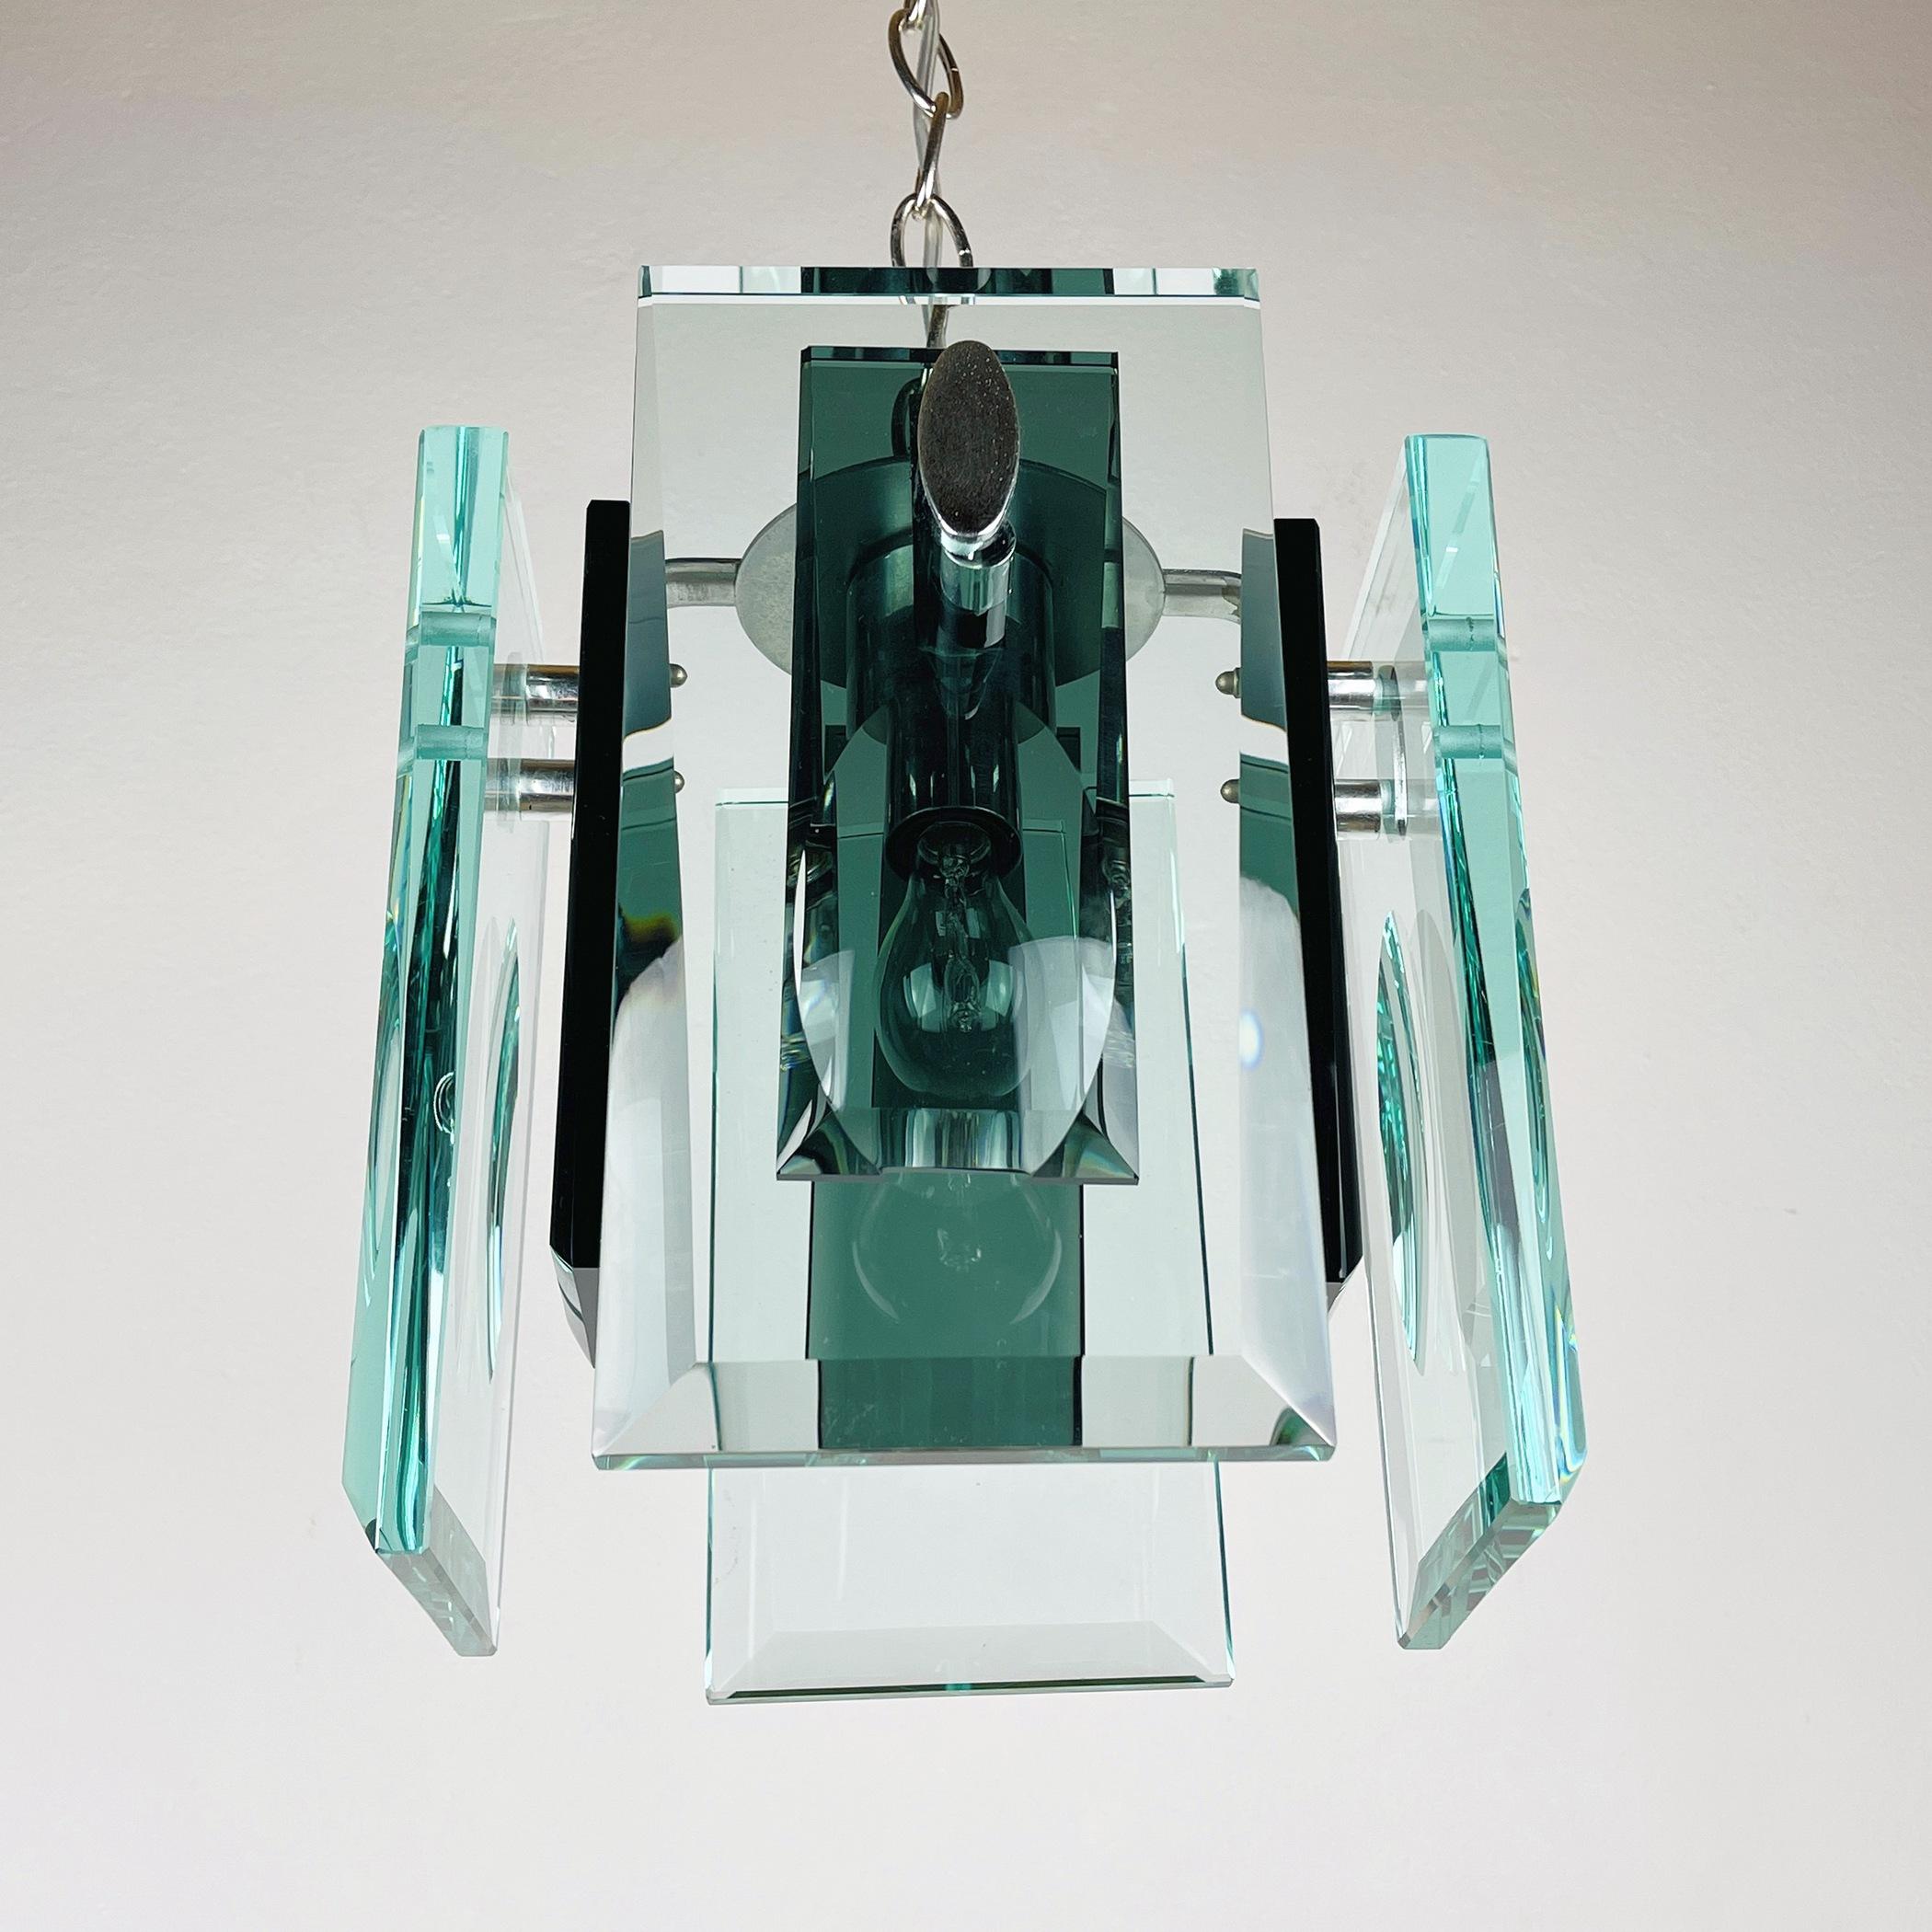 Rare Art Glass Pendant Lamp Italian Design by Fontana Arte Italy 70s For Sale 1